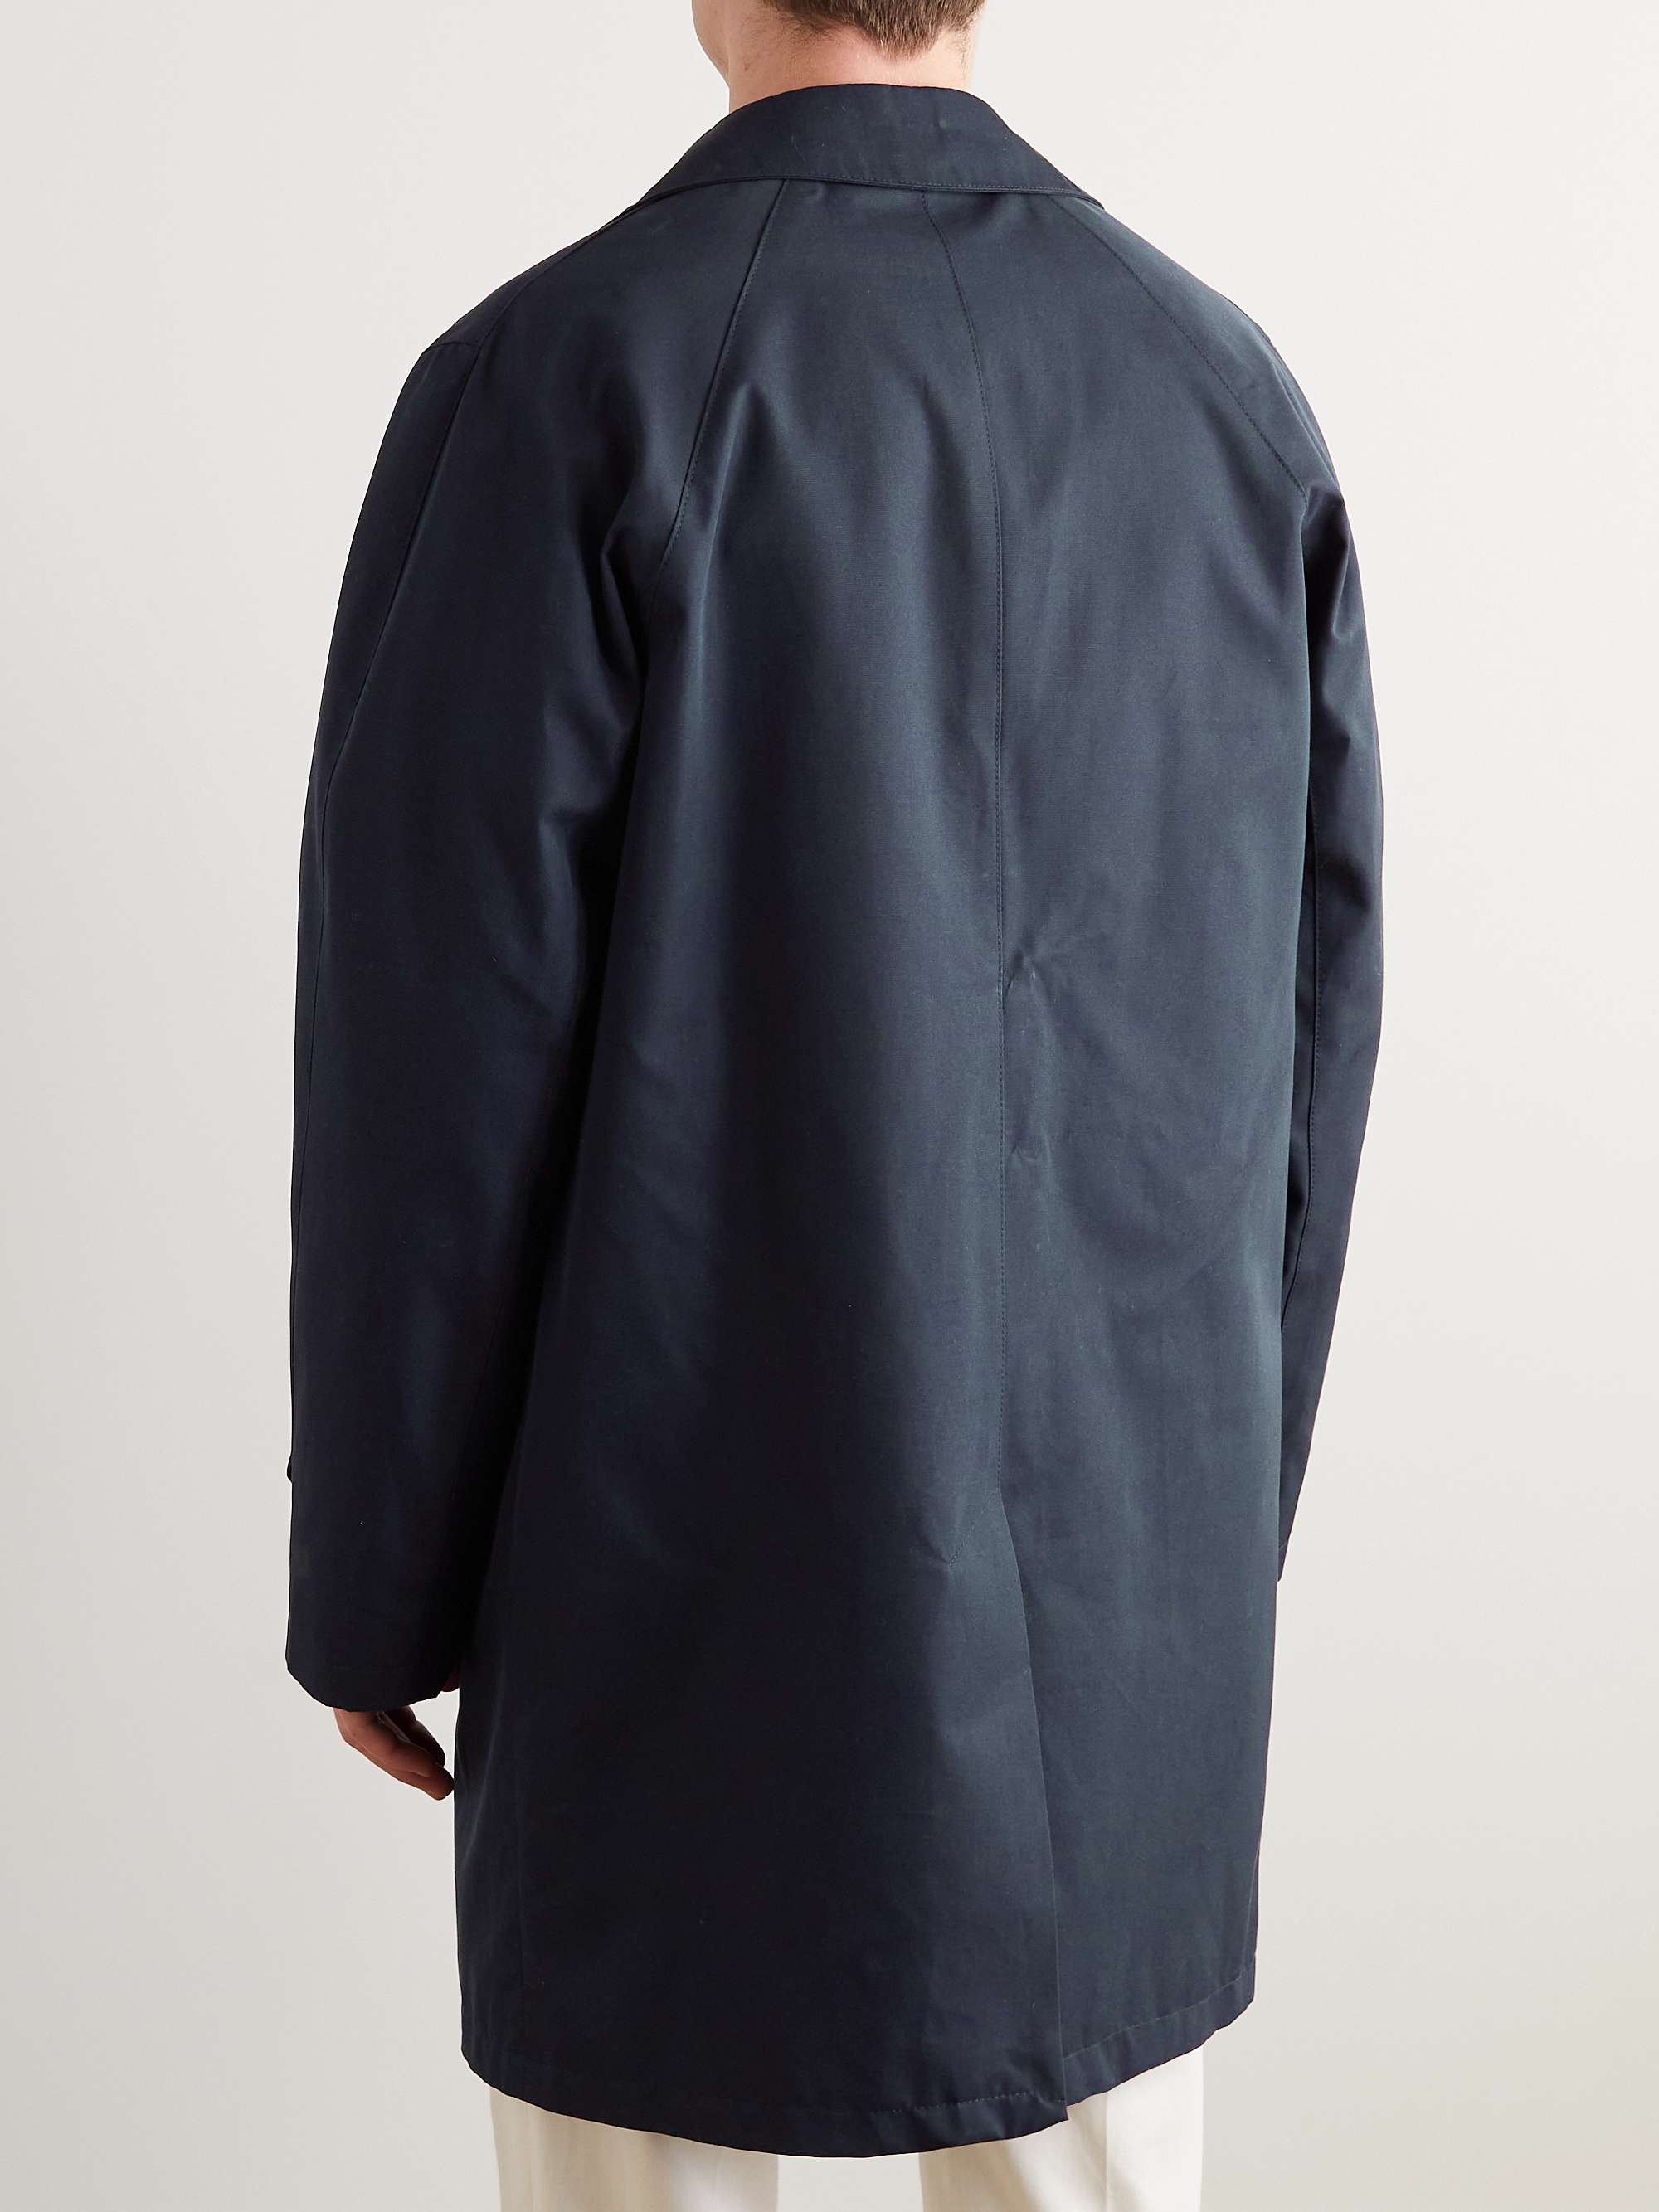 KINGSMAN Kilburn Cotton-Gabardine Raincoat